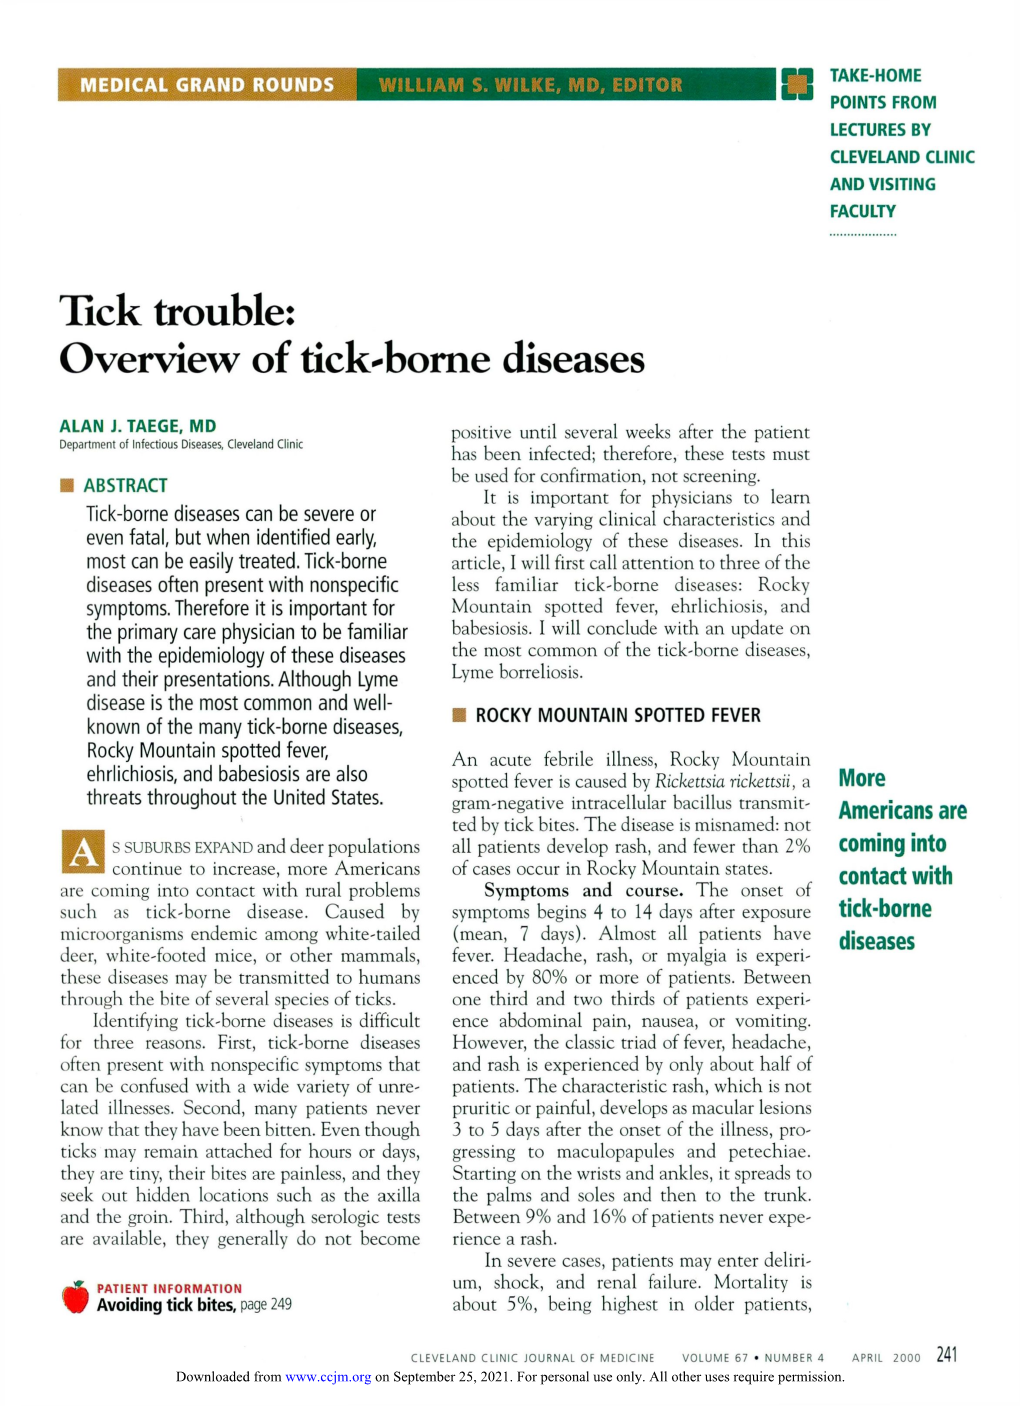 Overview of Tick-Borne Diseases